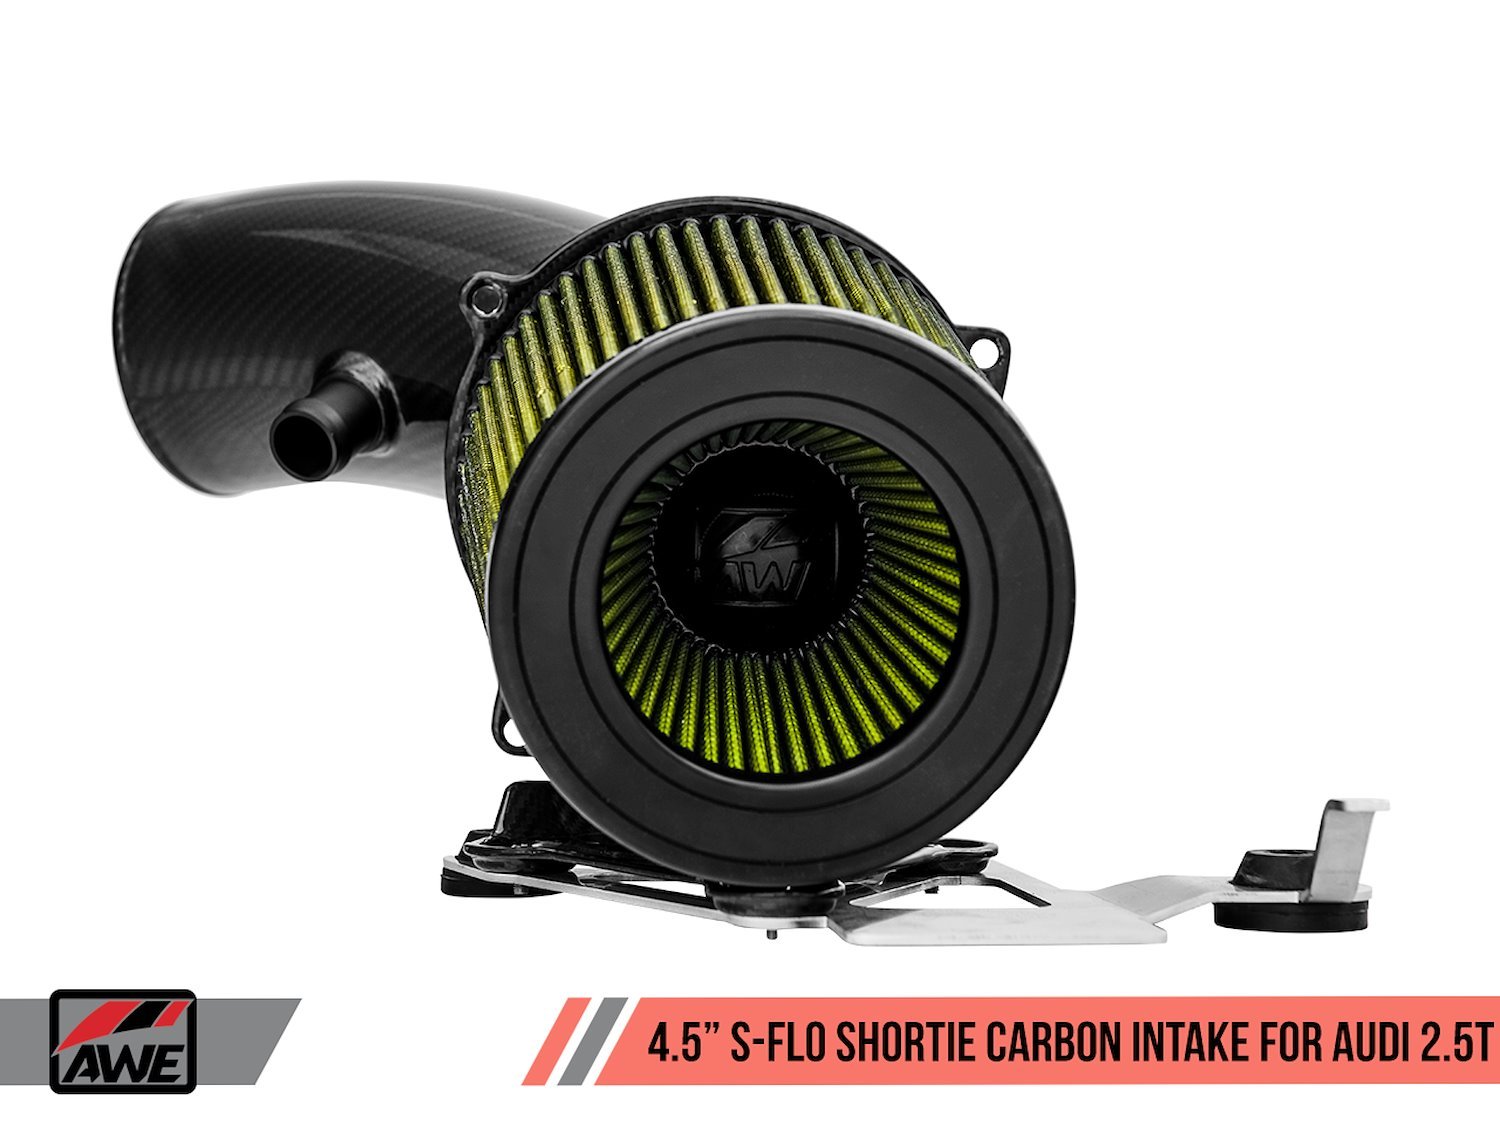 4.5" S-FLO Shortie Carbon Intake for Audi 8V / Mk3 2.5T